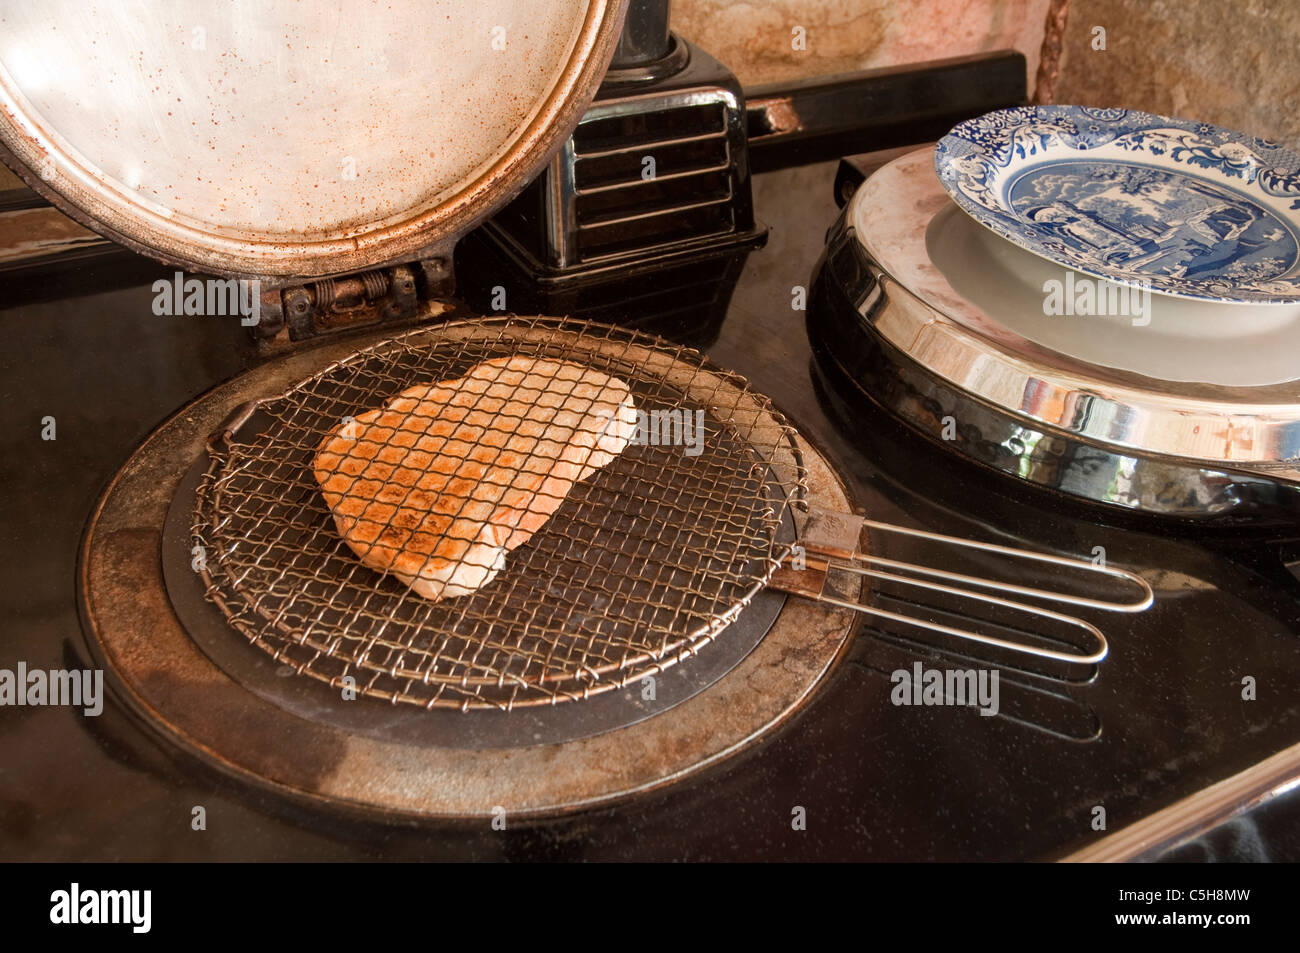 Making toast on an Aga cooker. UK Stock Photo